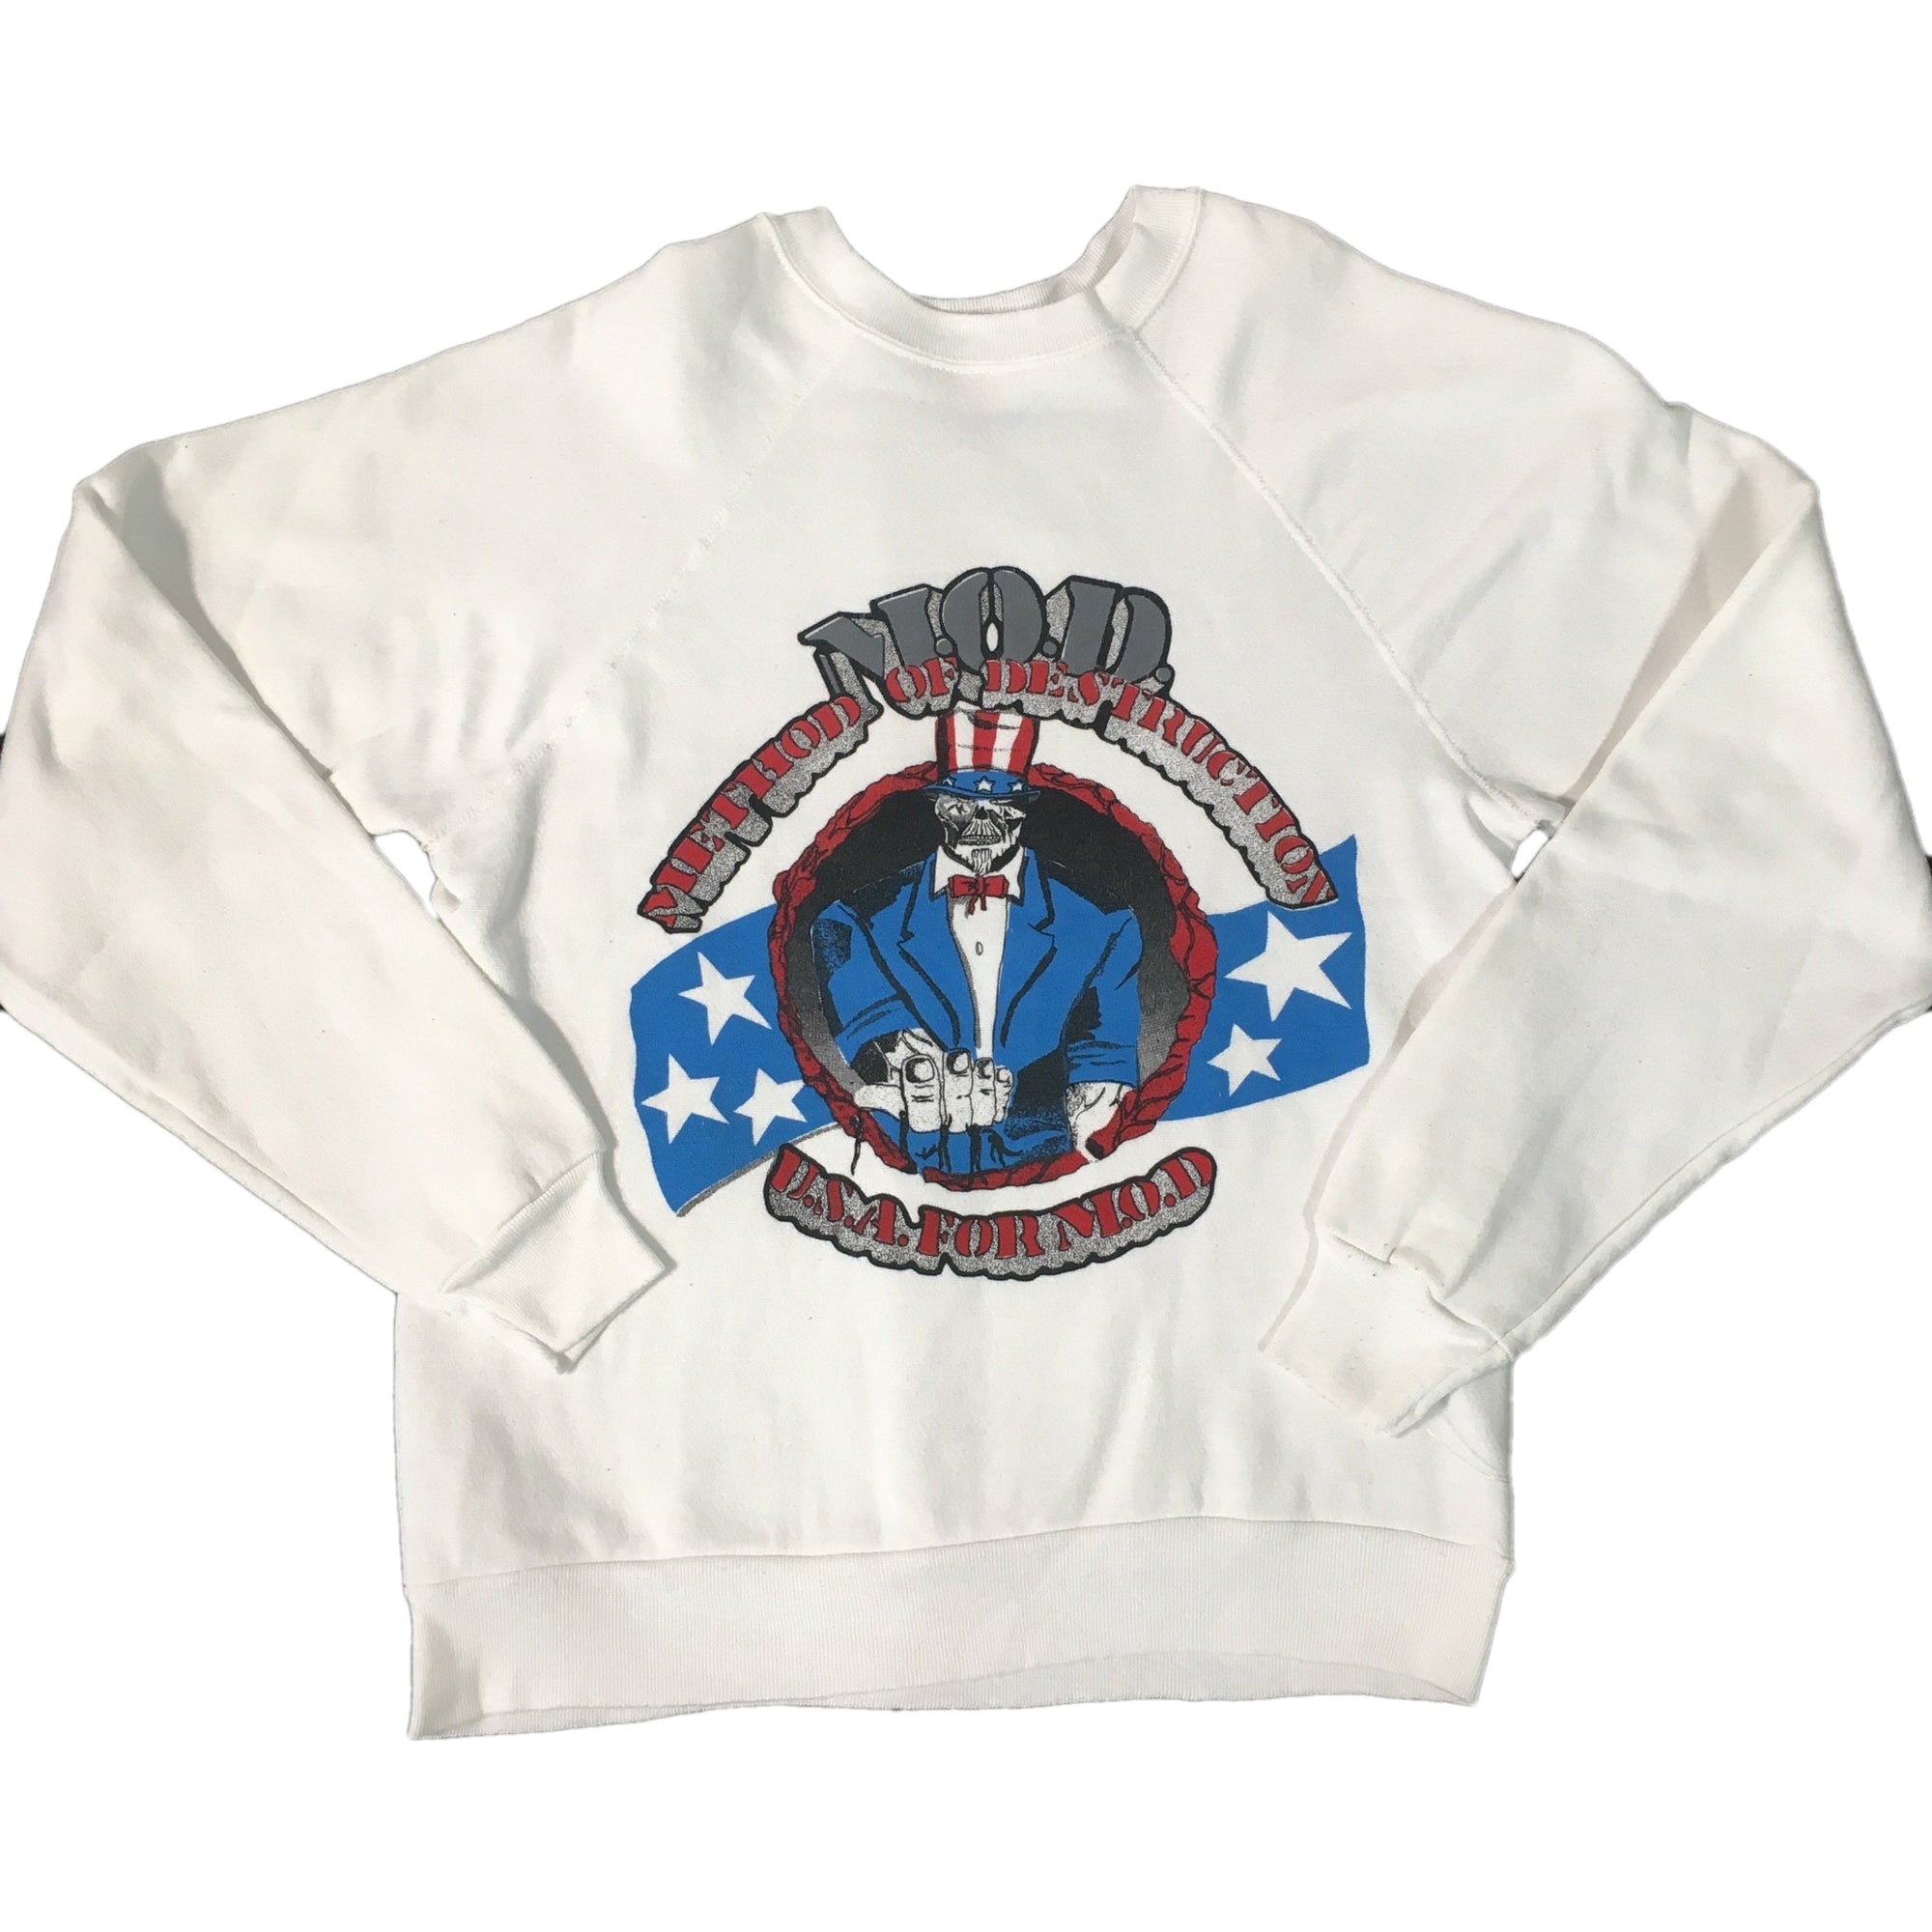 Vintage M.O.D. "U.S.A. For M.O.D." Crewneck Sweatshirt - jointcustodydc